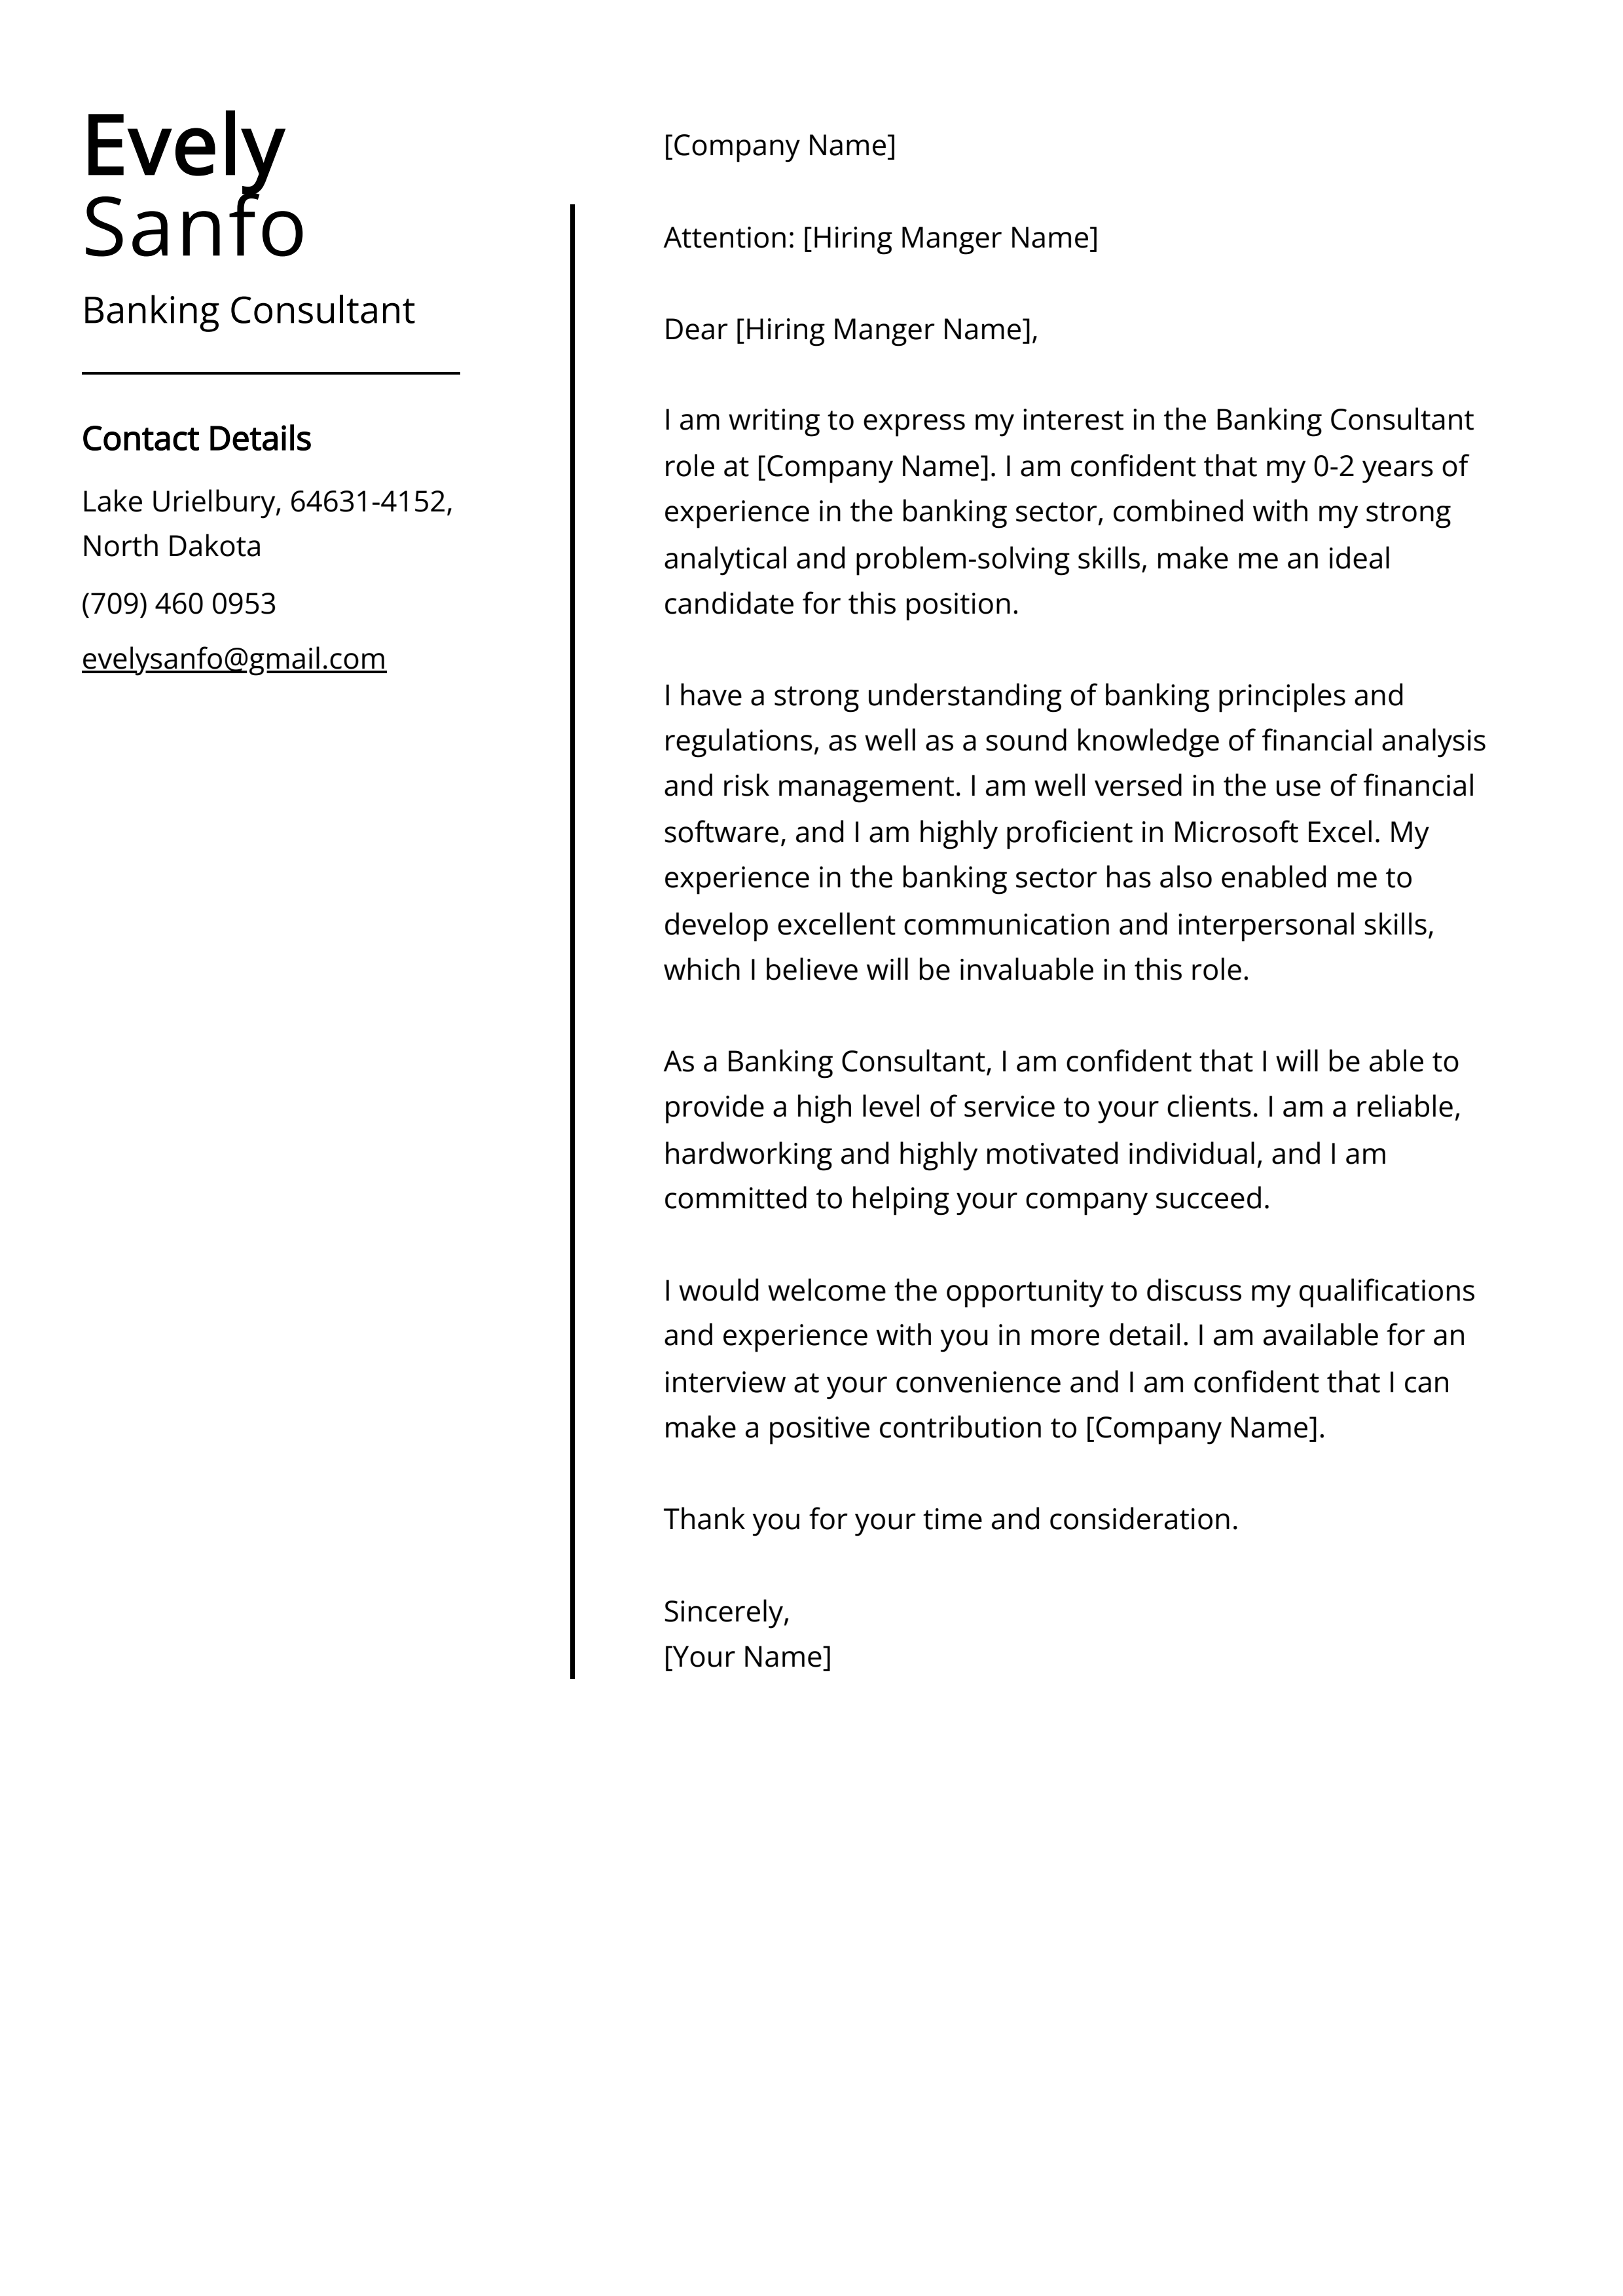 resume cover letter for banking position